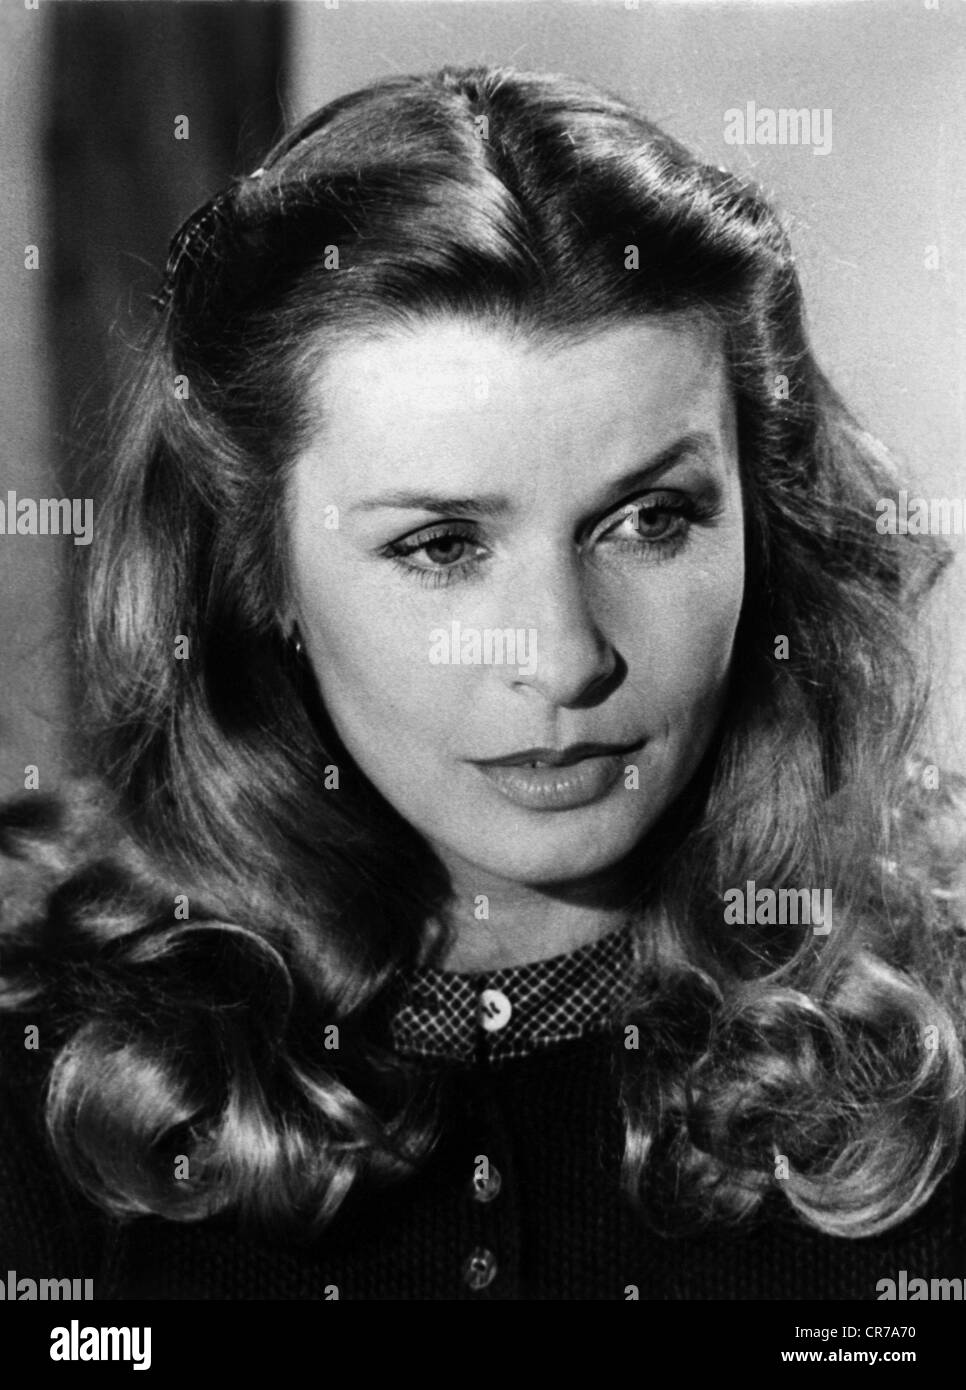 Berger, Senta, * 13.5.1941, attrice austriaca, portrait, 1981, Foto Stock